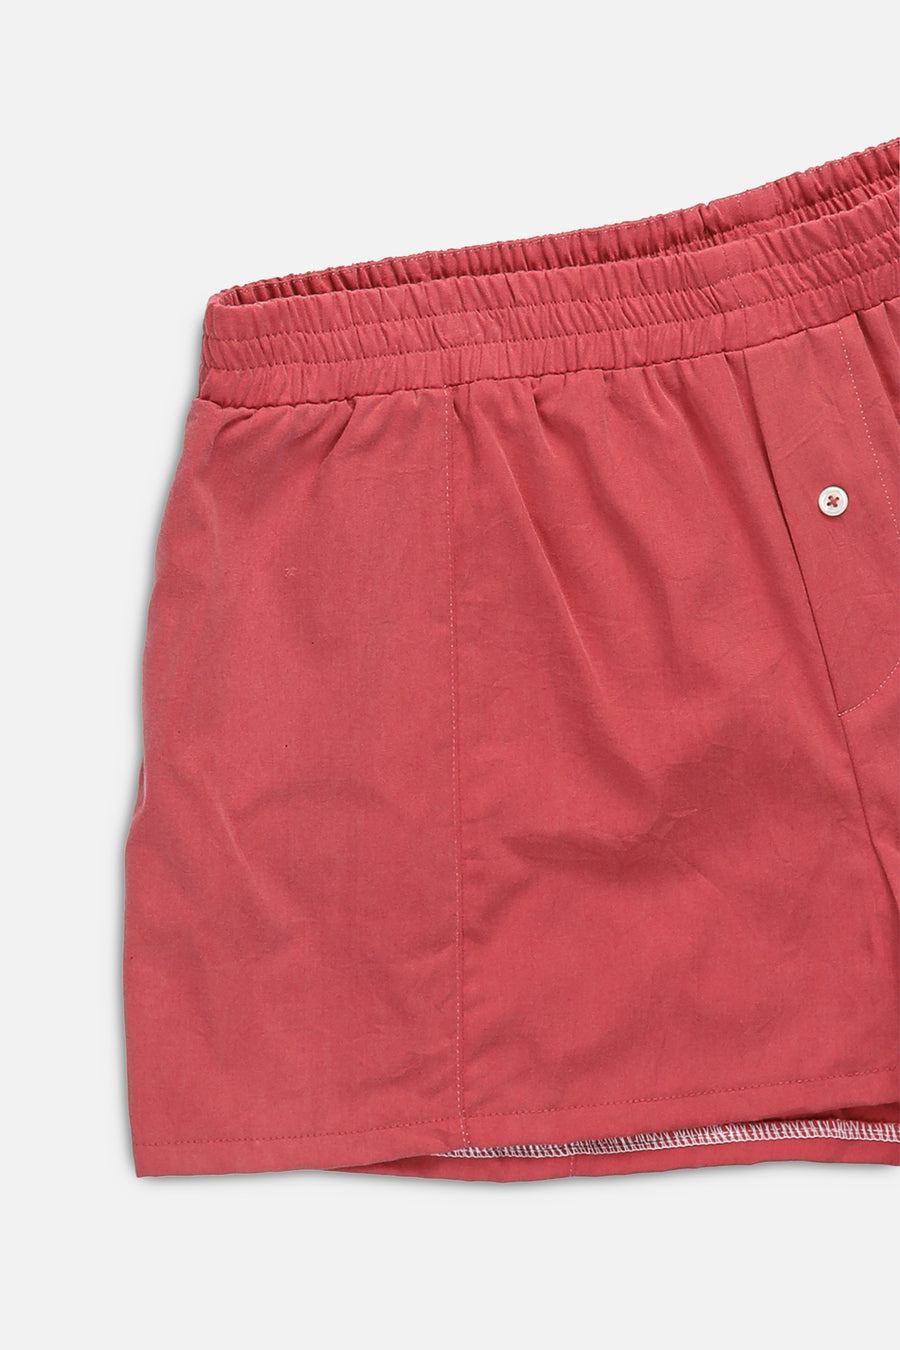 Rework Oxford Mini Boxer Shorts - XL